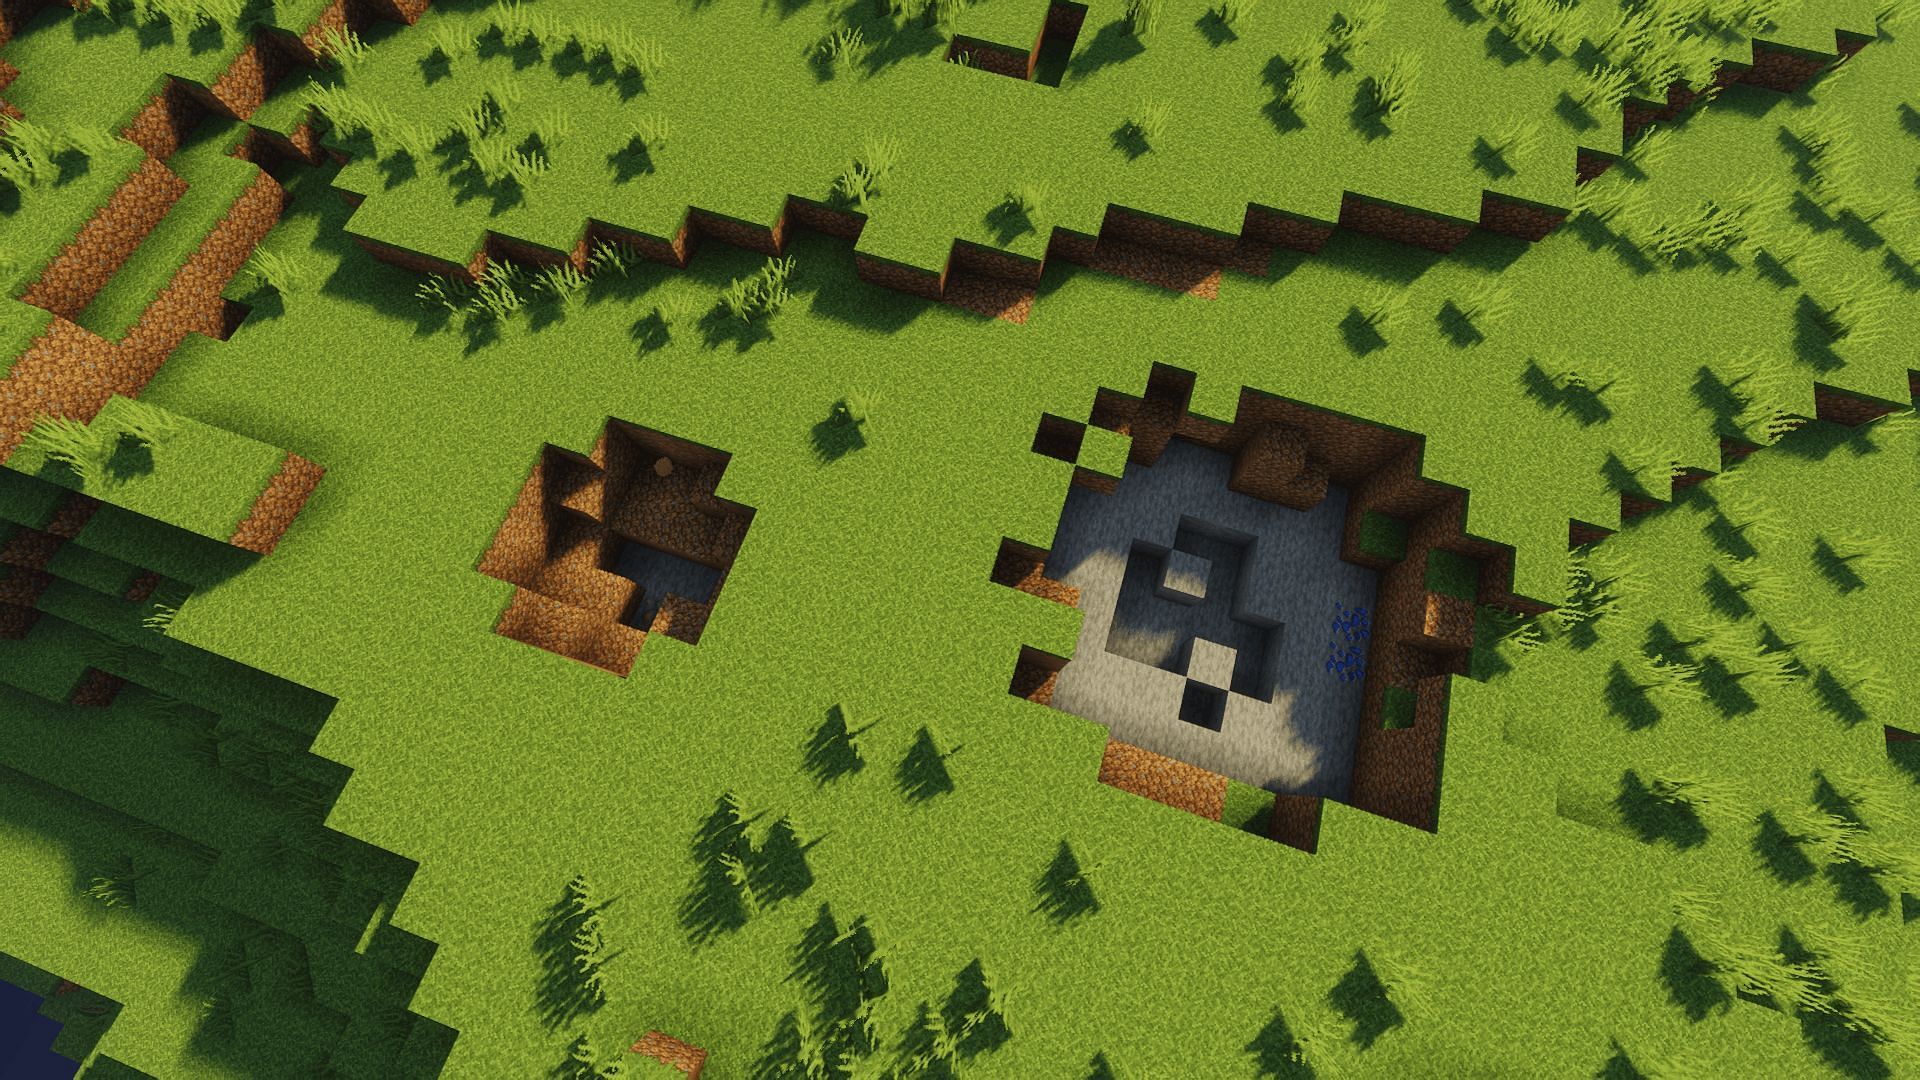 A regular creeper explosion on the left, compared to a charged creeper explosion on the right (Image via Minecraft)